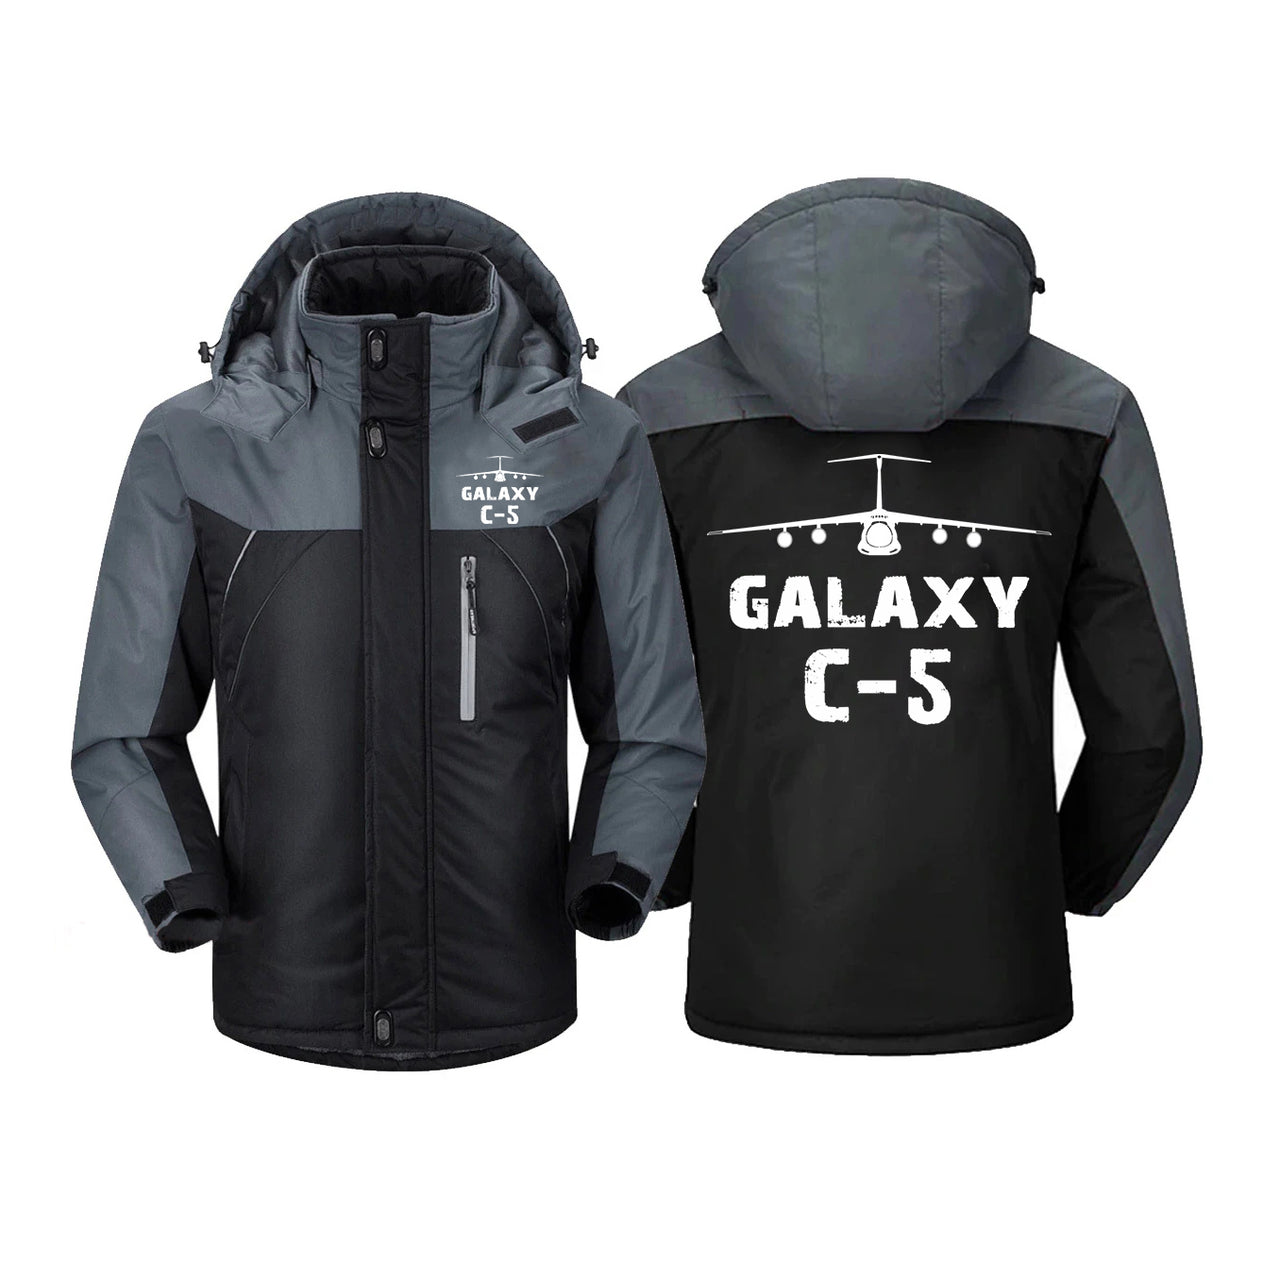 Galaxy C-5 & Plane Designed Thick Winter Jackets